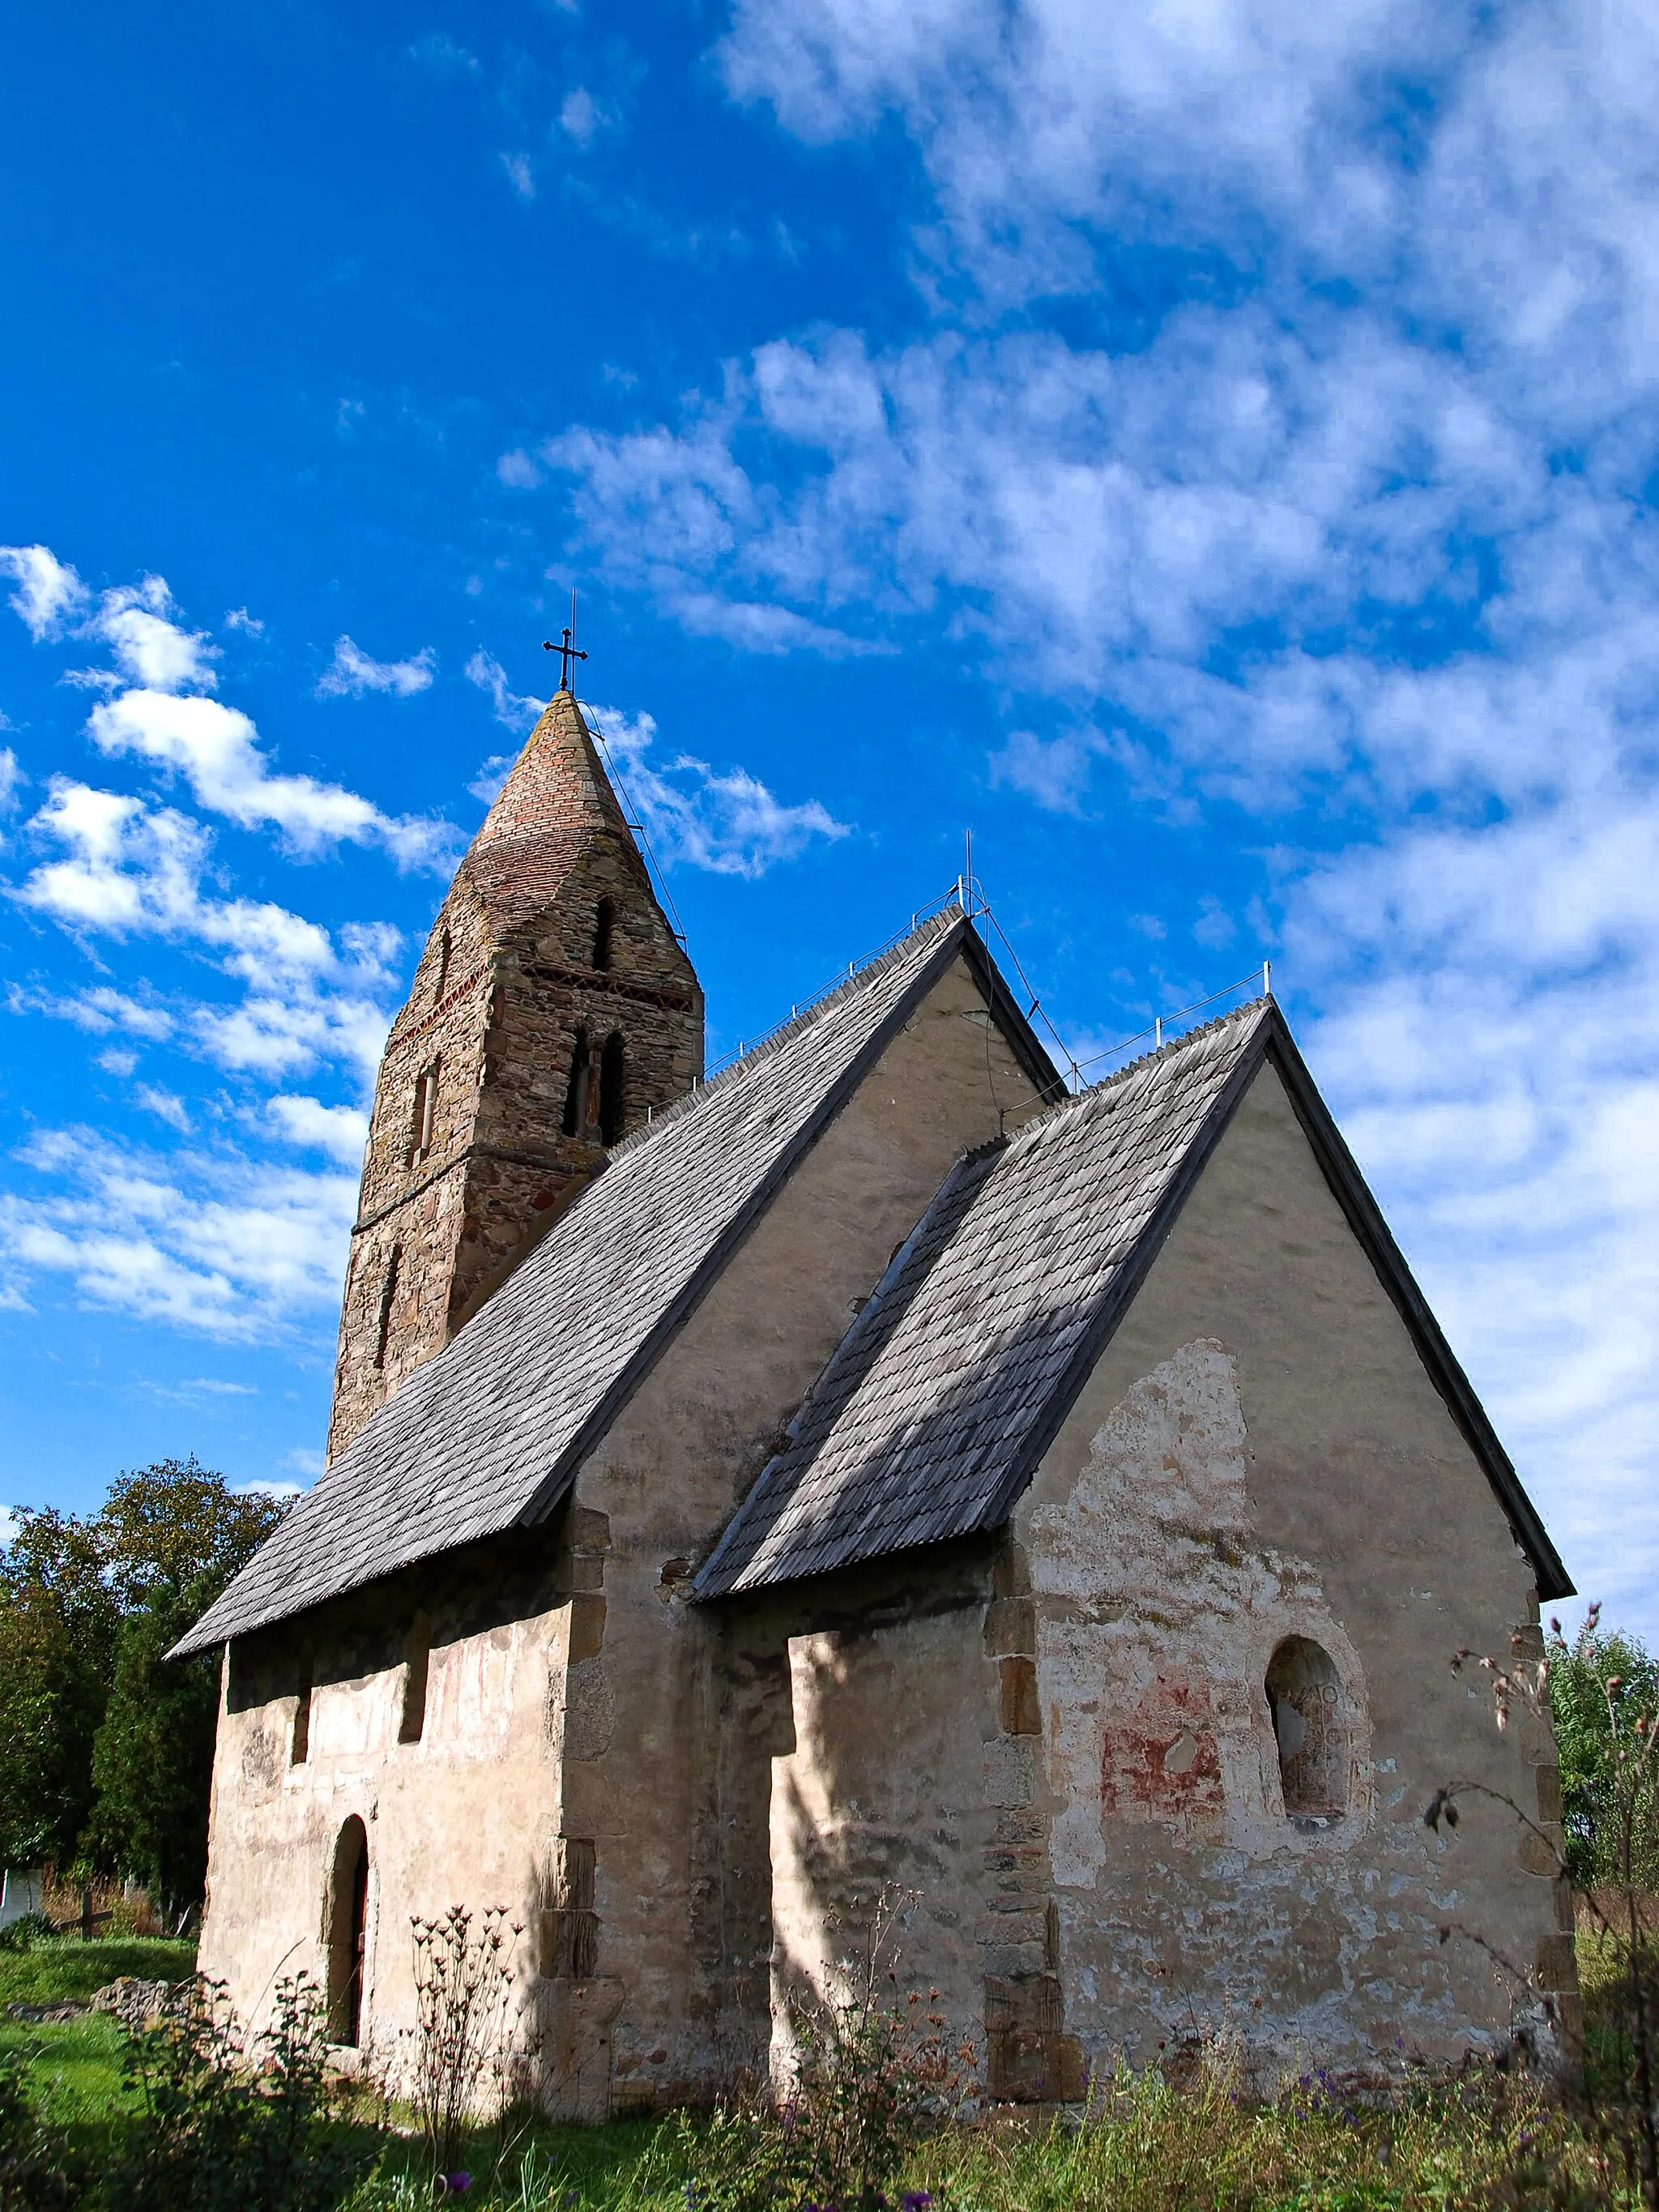 Photo showing: The "Adormirea Maicii Domnului" church in Strei